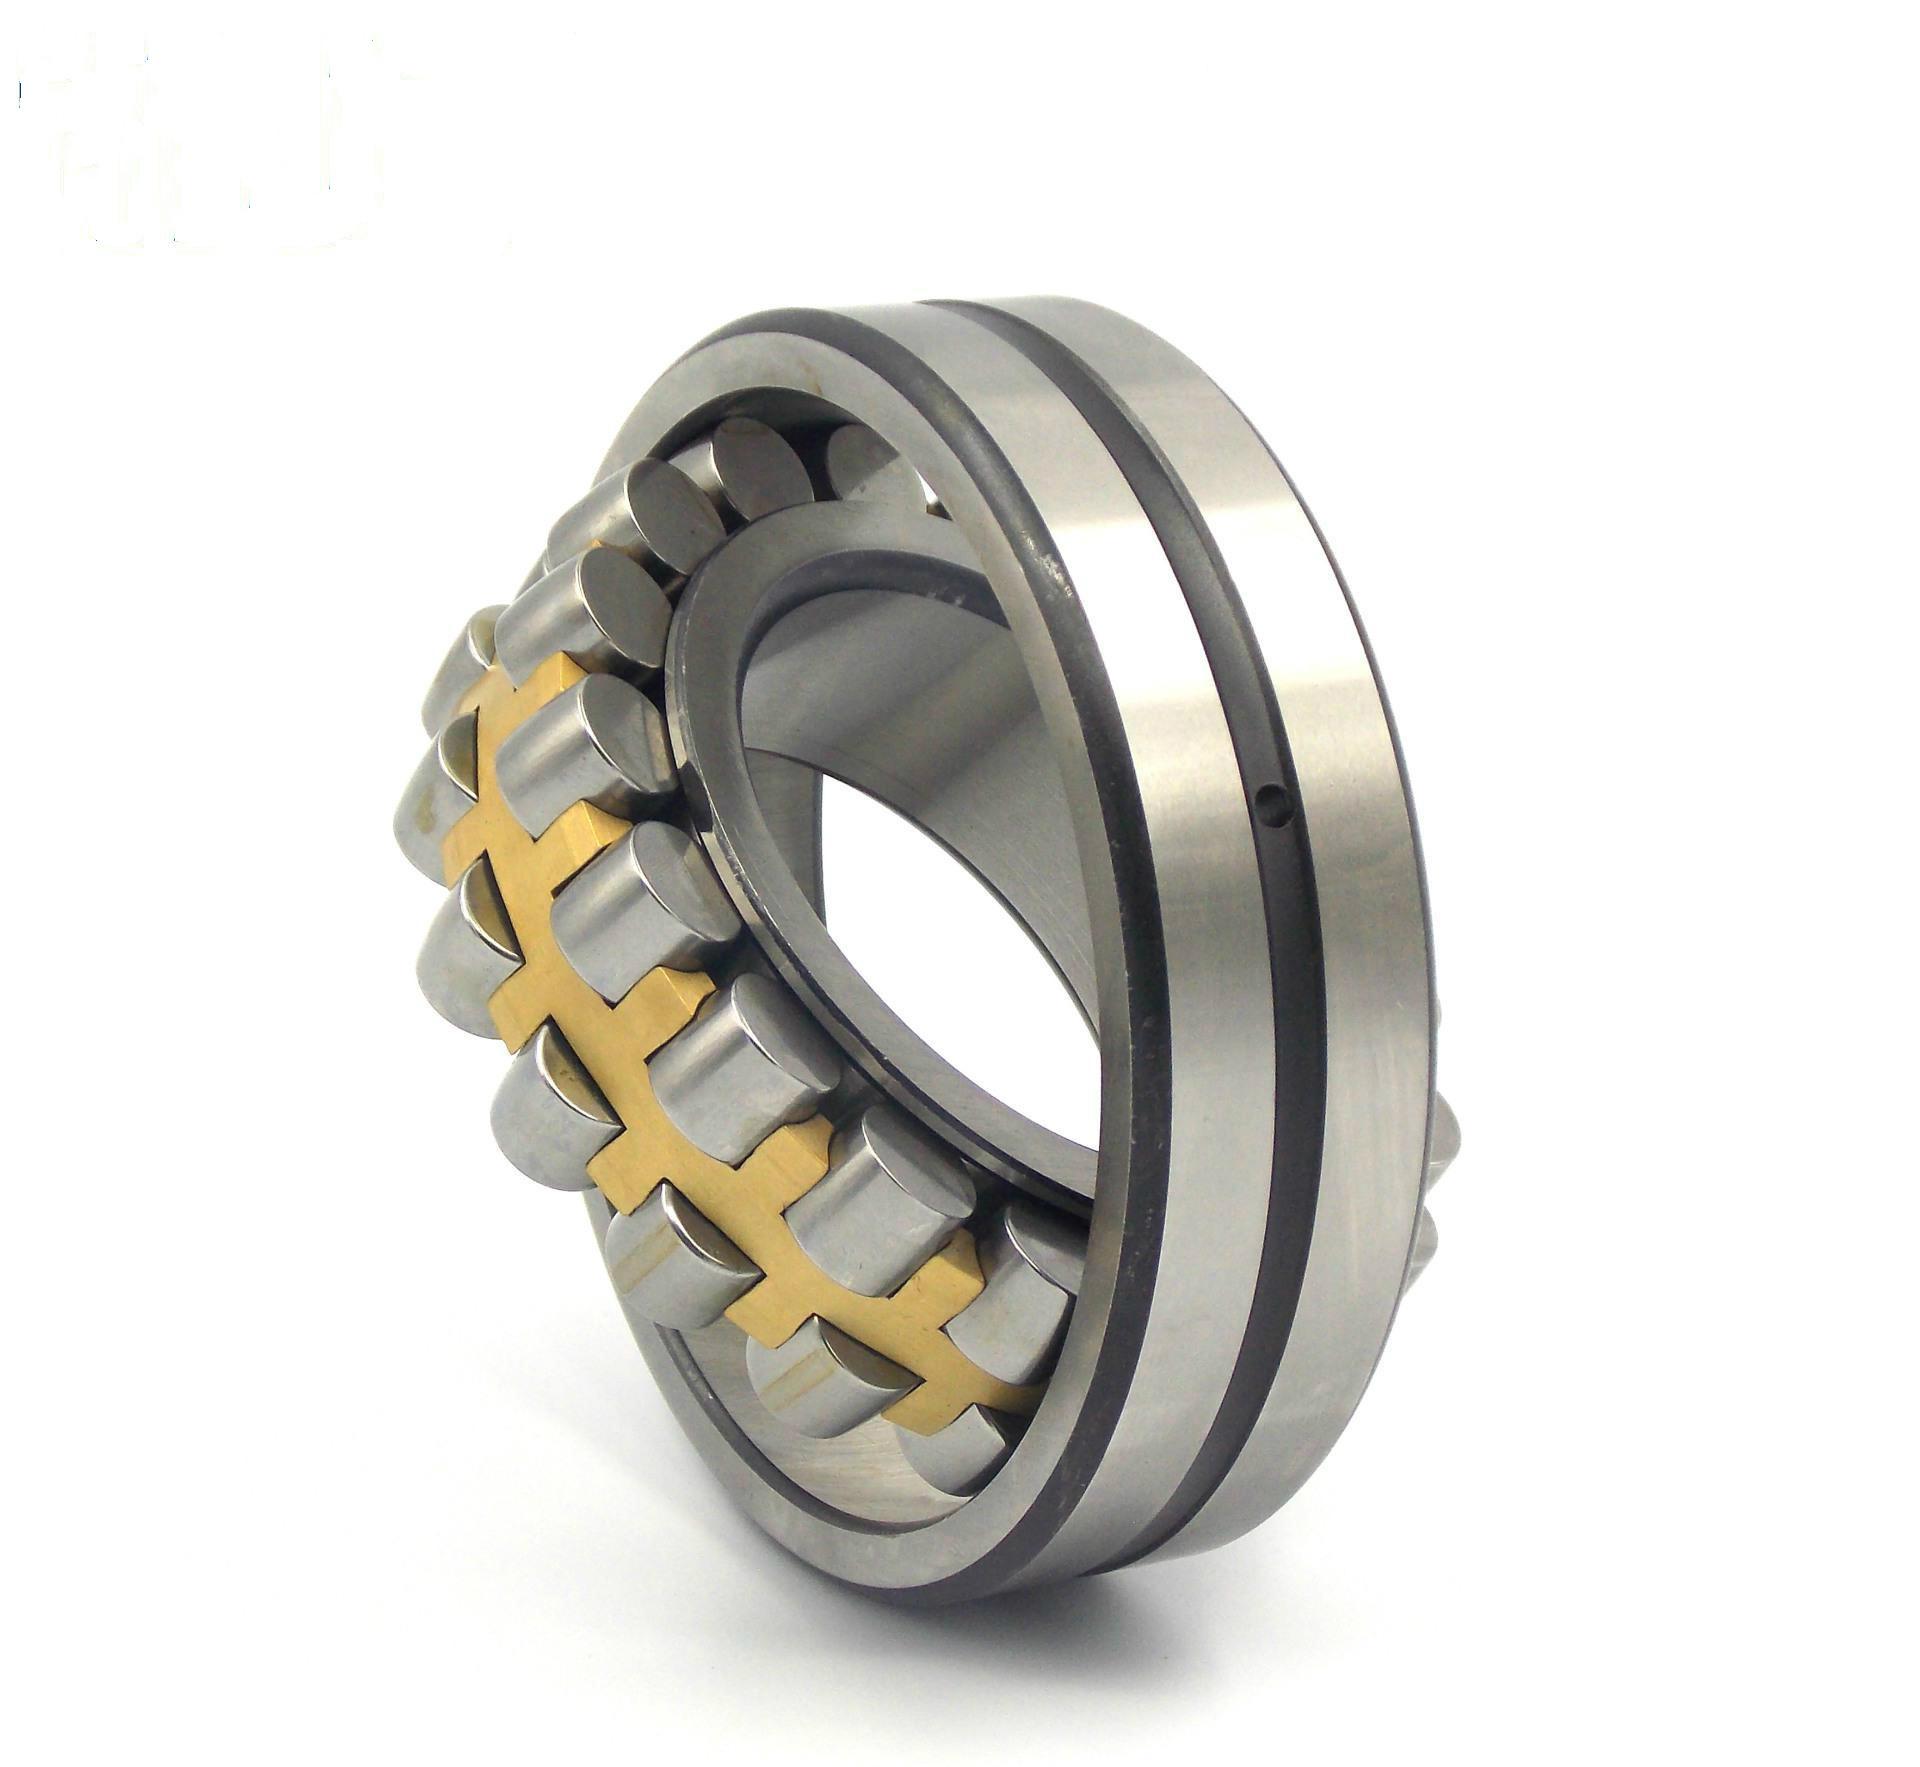  NJ 2220 J Cylindrical roller bearing